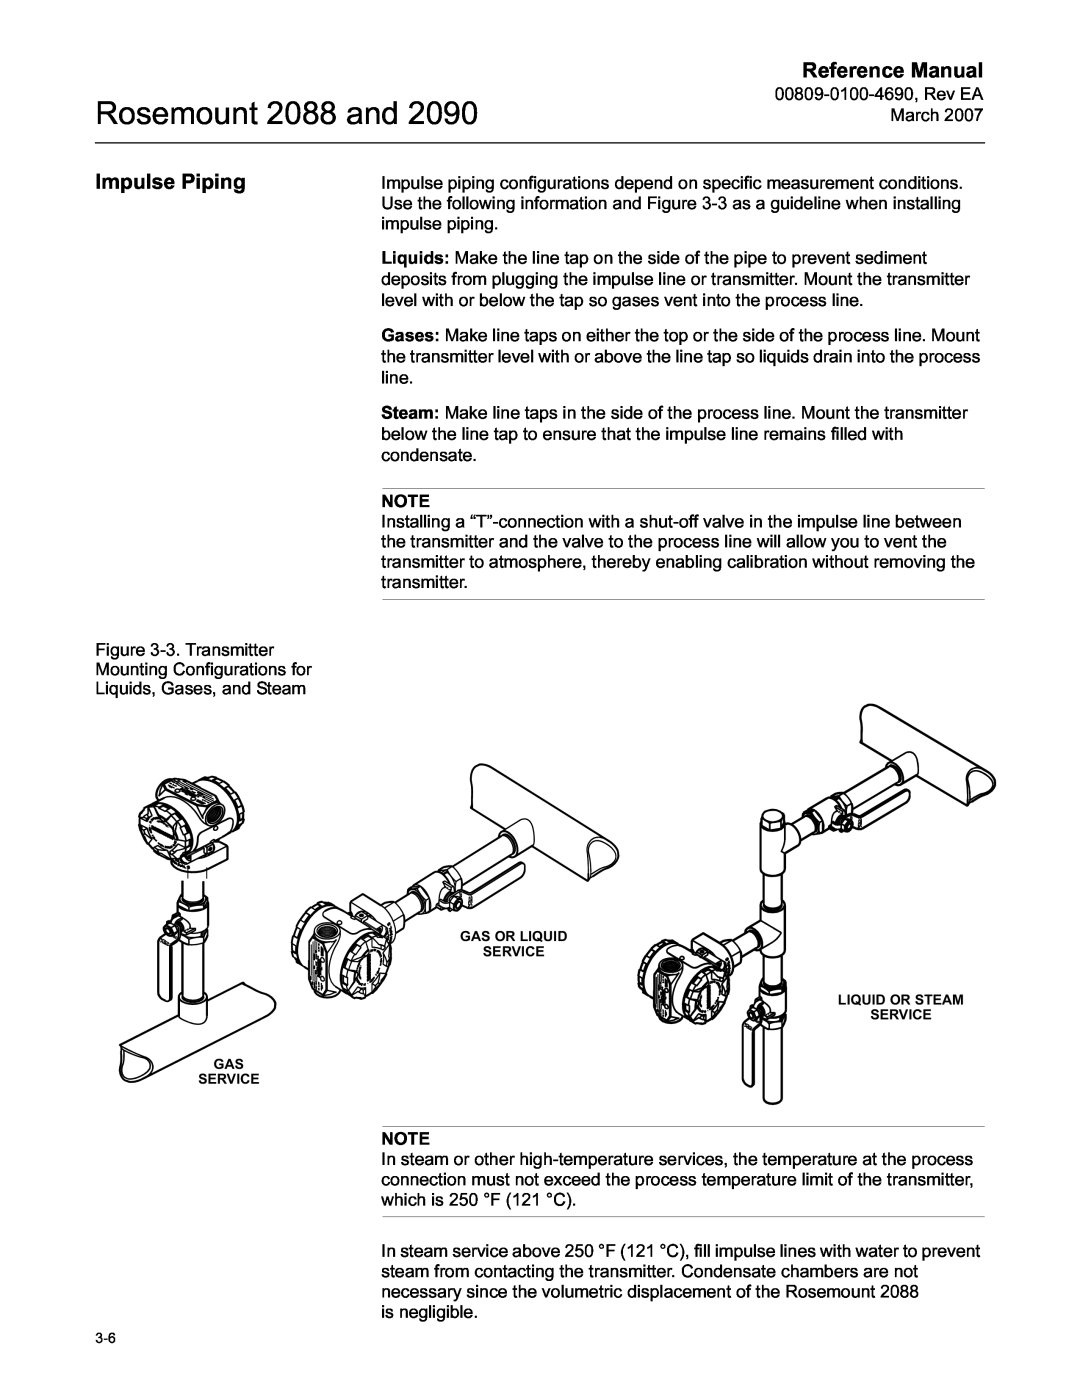 Emerson Process Management 2090 manual Impulse Piping, Rosemount 2088 and, Reference Manual 